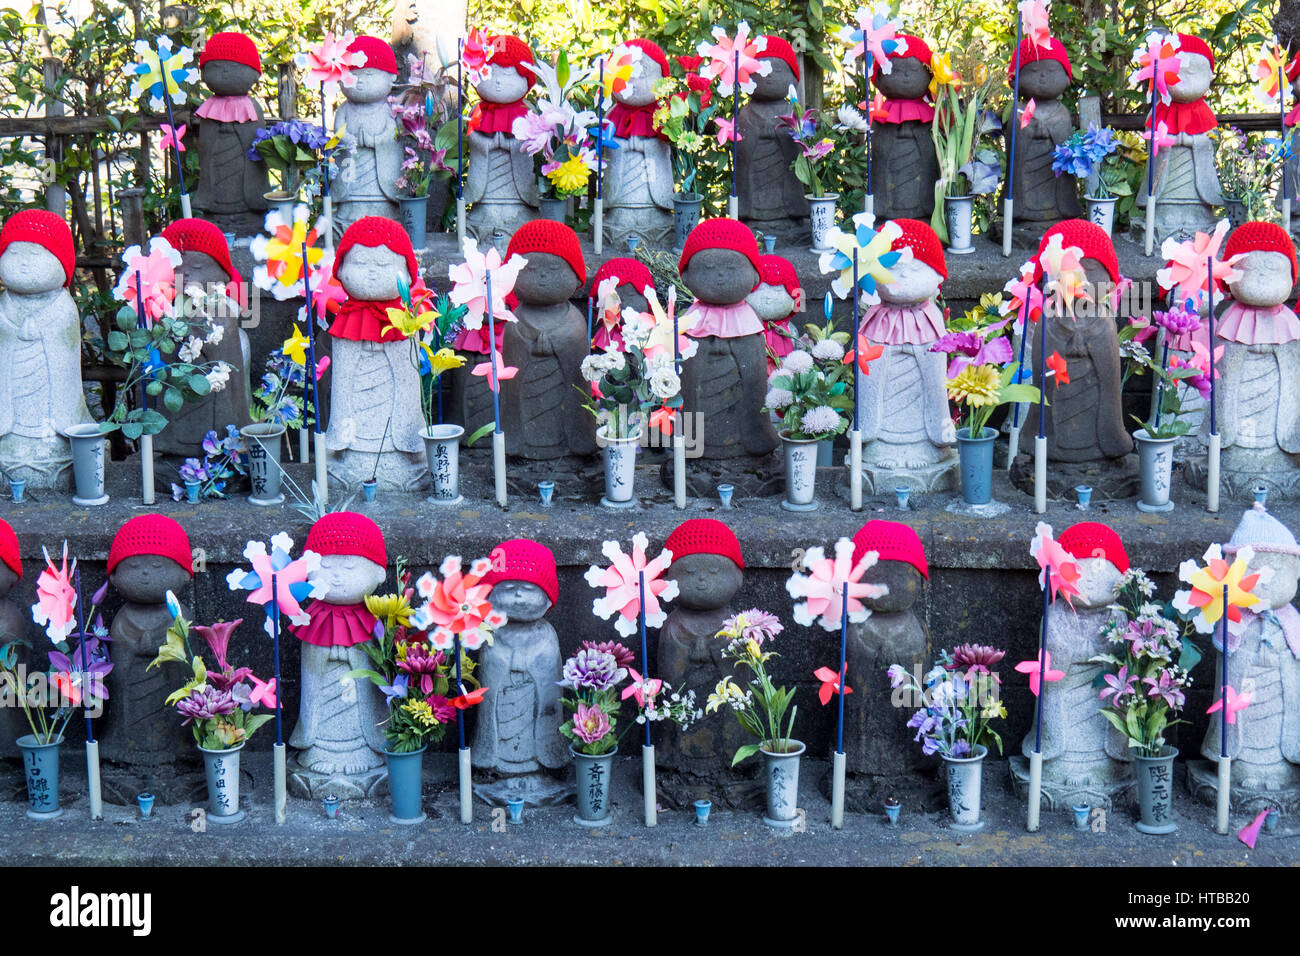 Unborn Children Garden, rows of stone Jizō statues of children representing unborn children in the cemetery at Zōjō-ji temple, Tokyo. Stock Photo